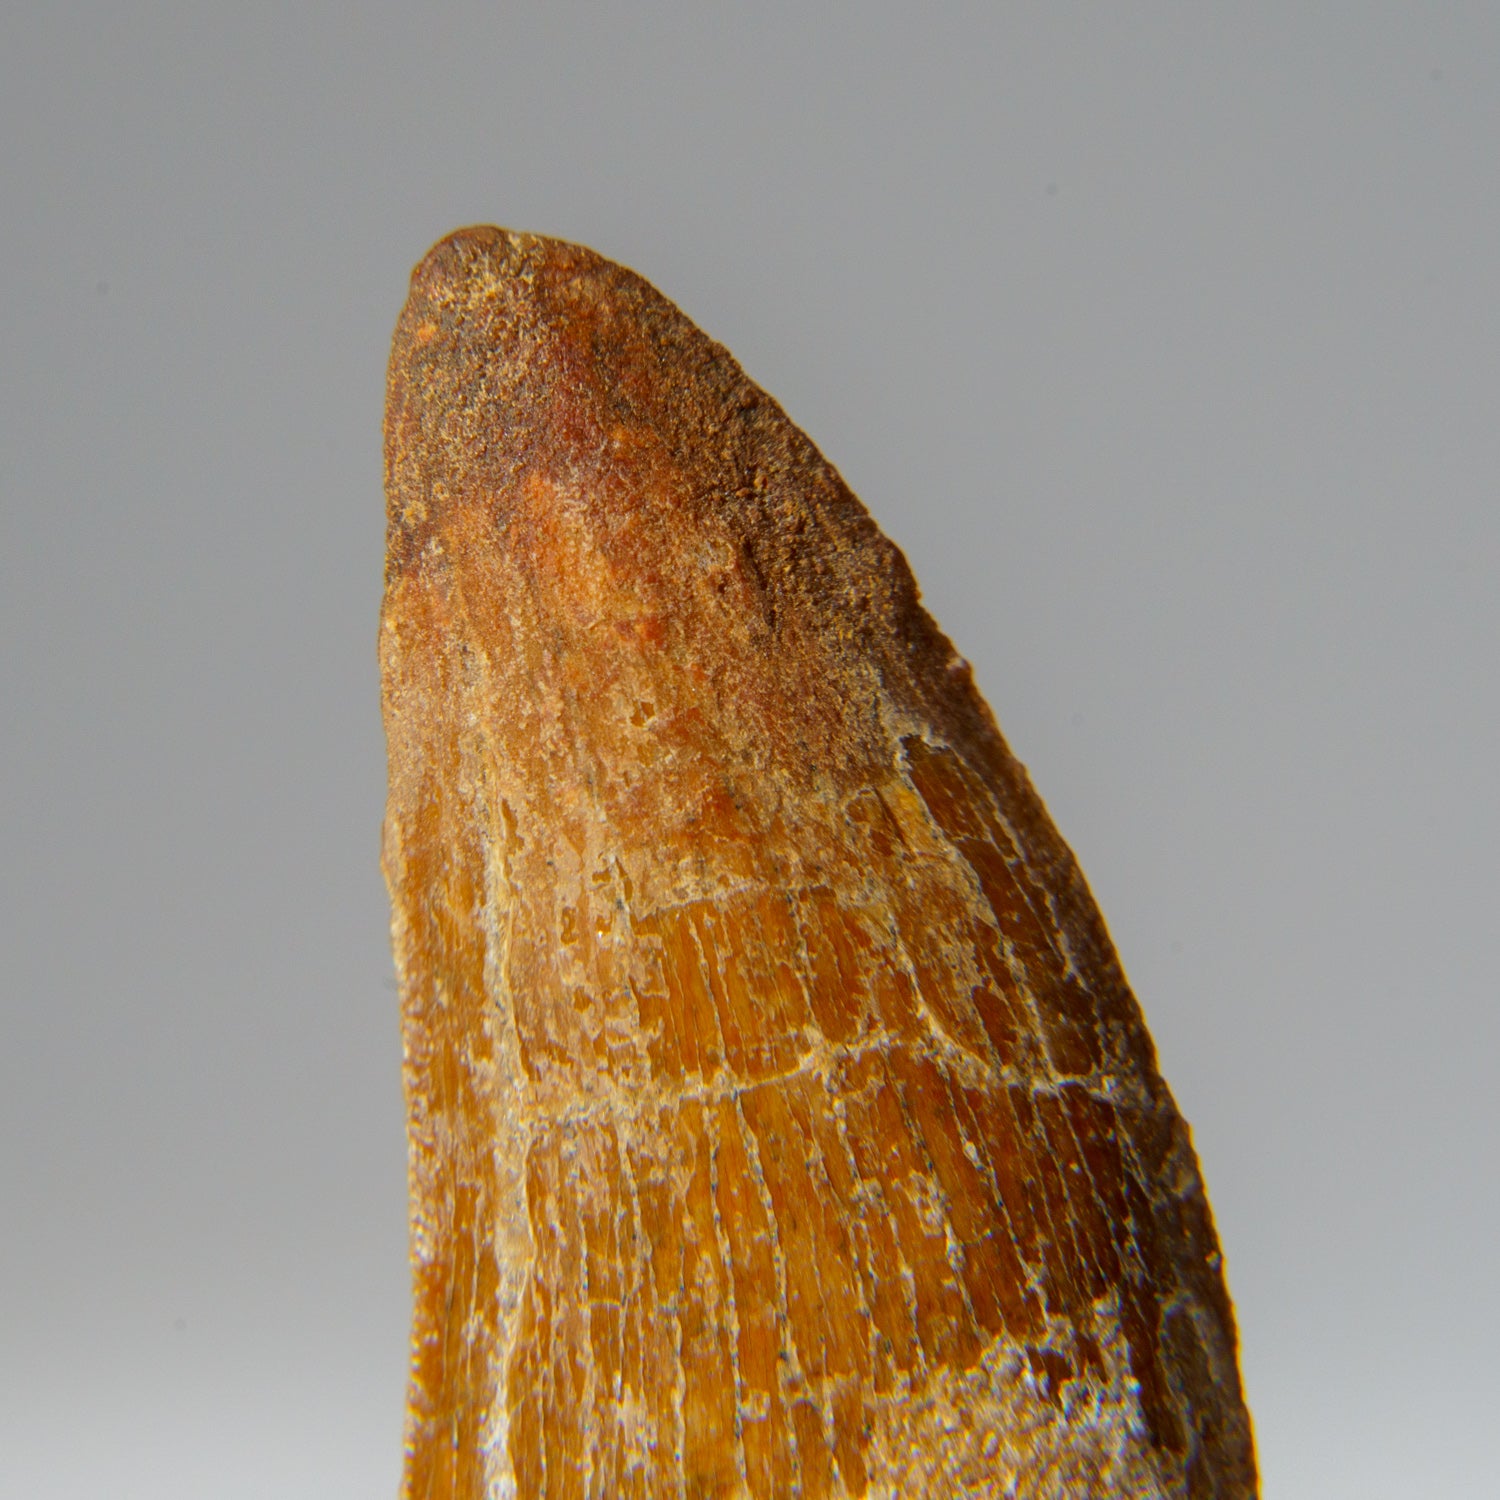 Genuine Carcharodontosaurus Tooth in Display Box (16.1 grams)